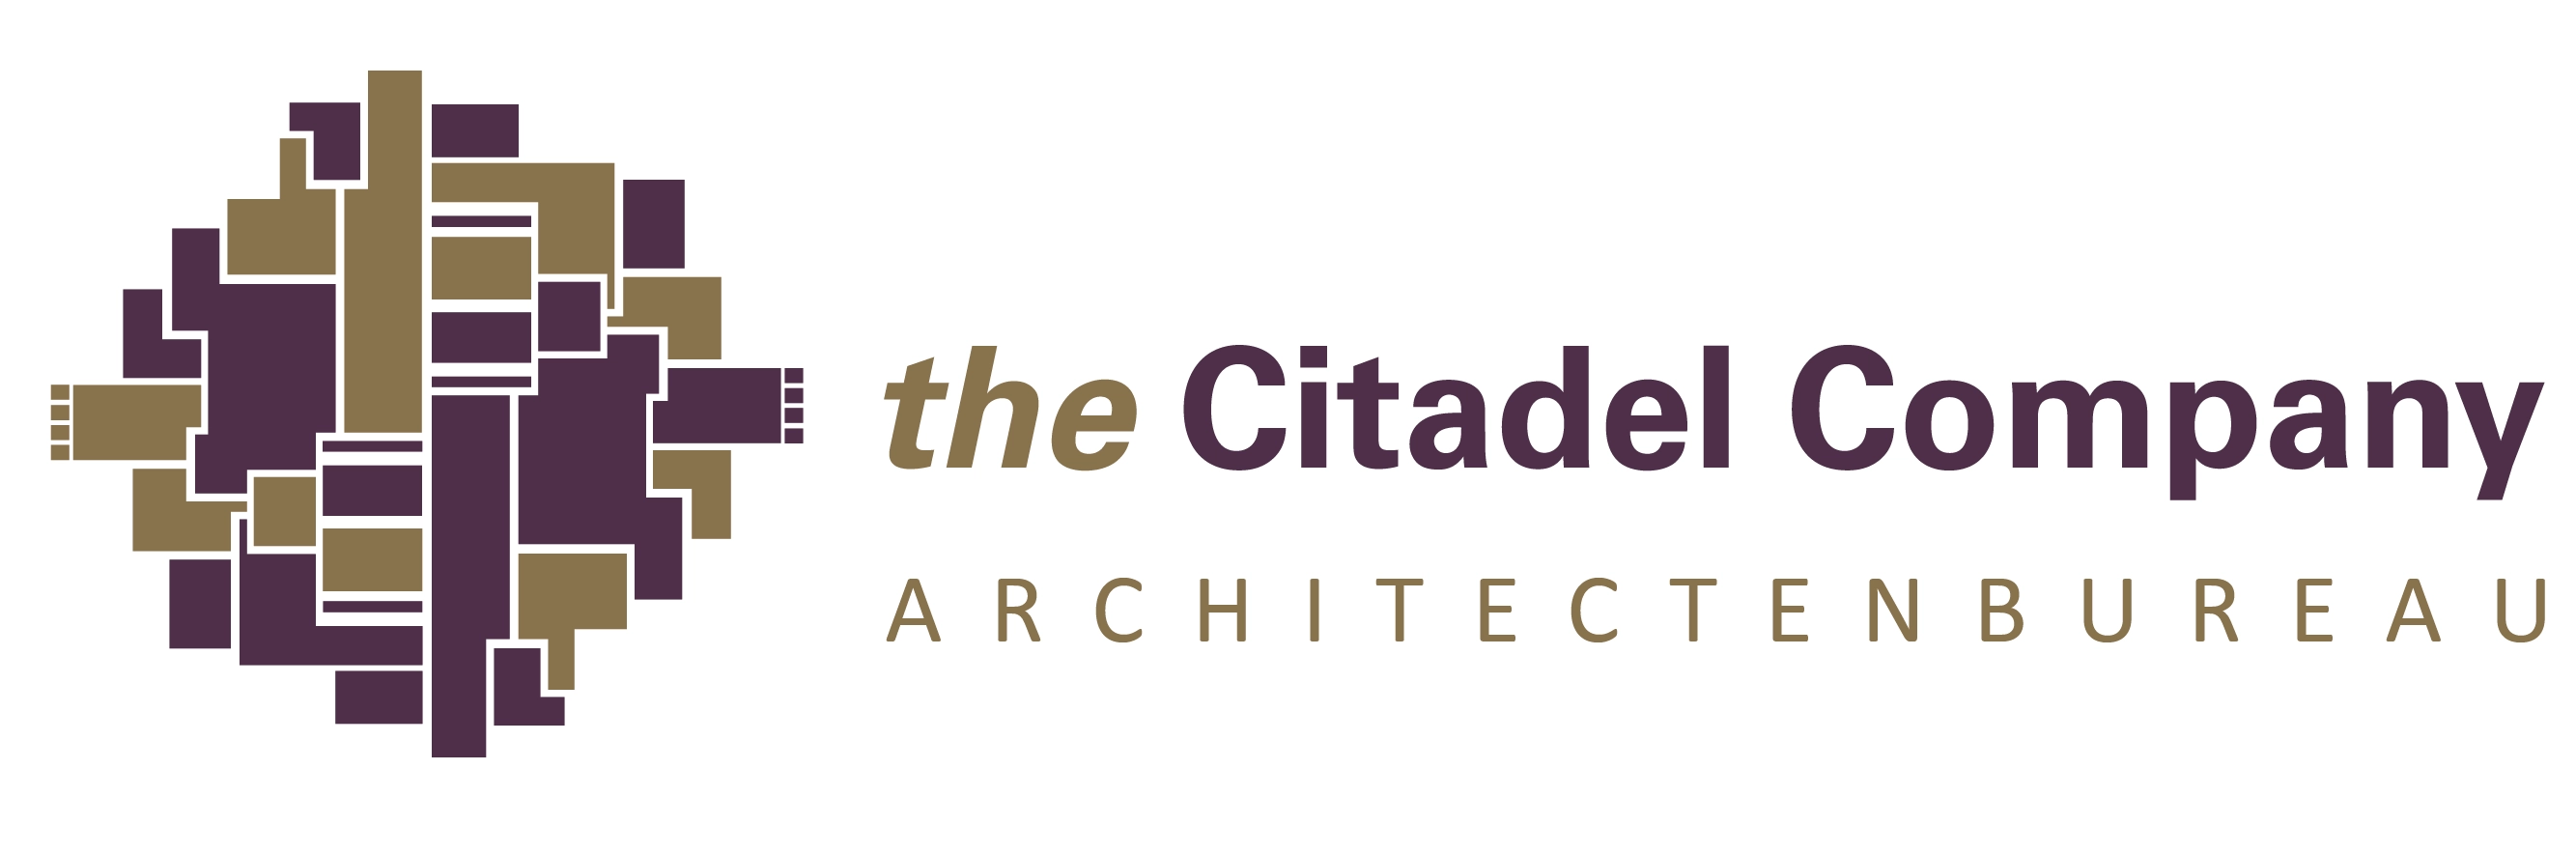 The Citadel Company